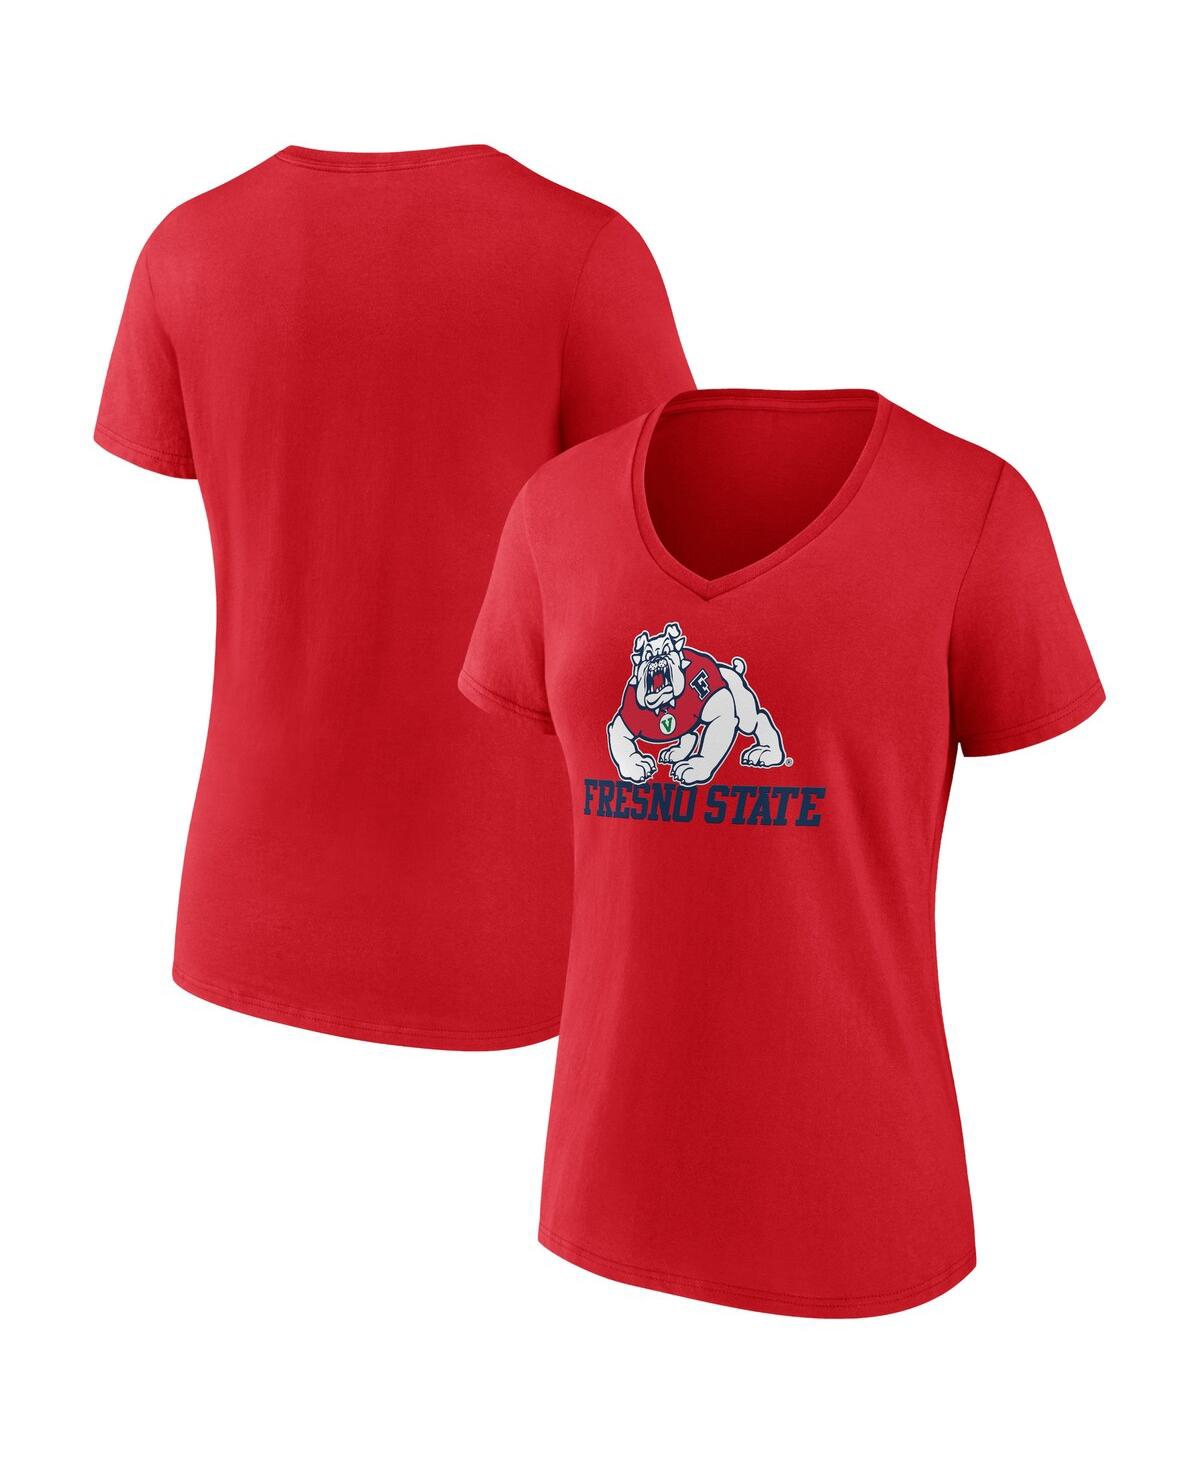 Fanatics Women's  Red Illinois State Redbirds Evergreen Campus V-neck T-shirt